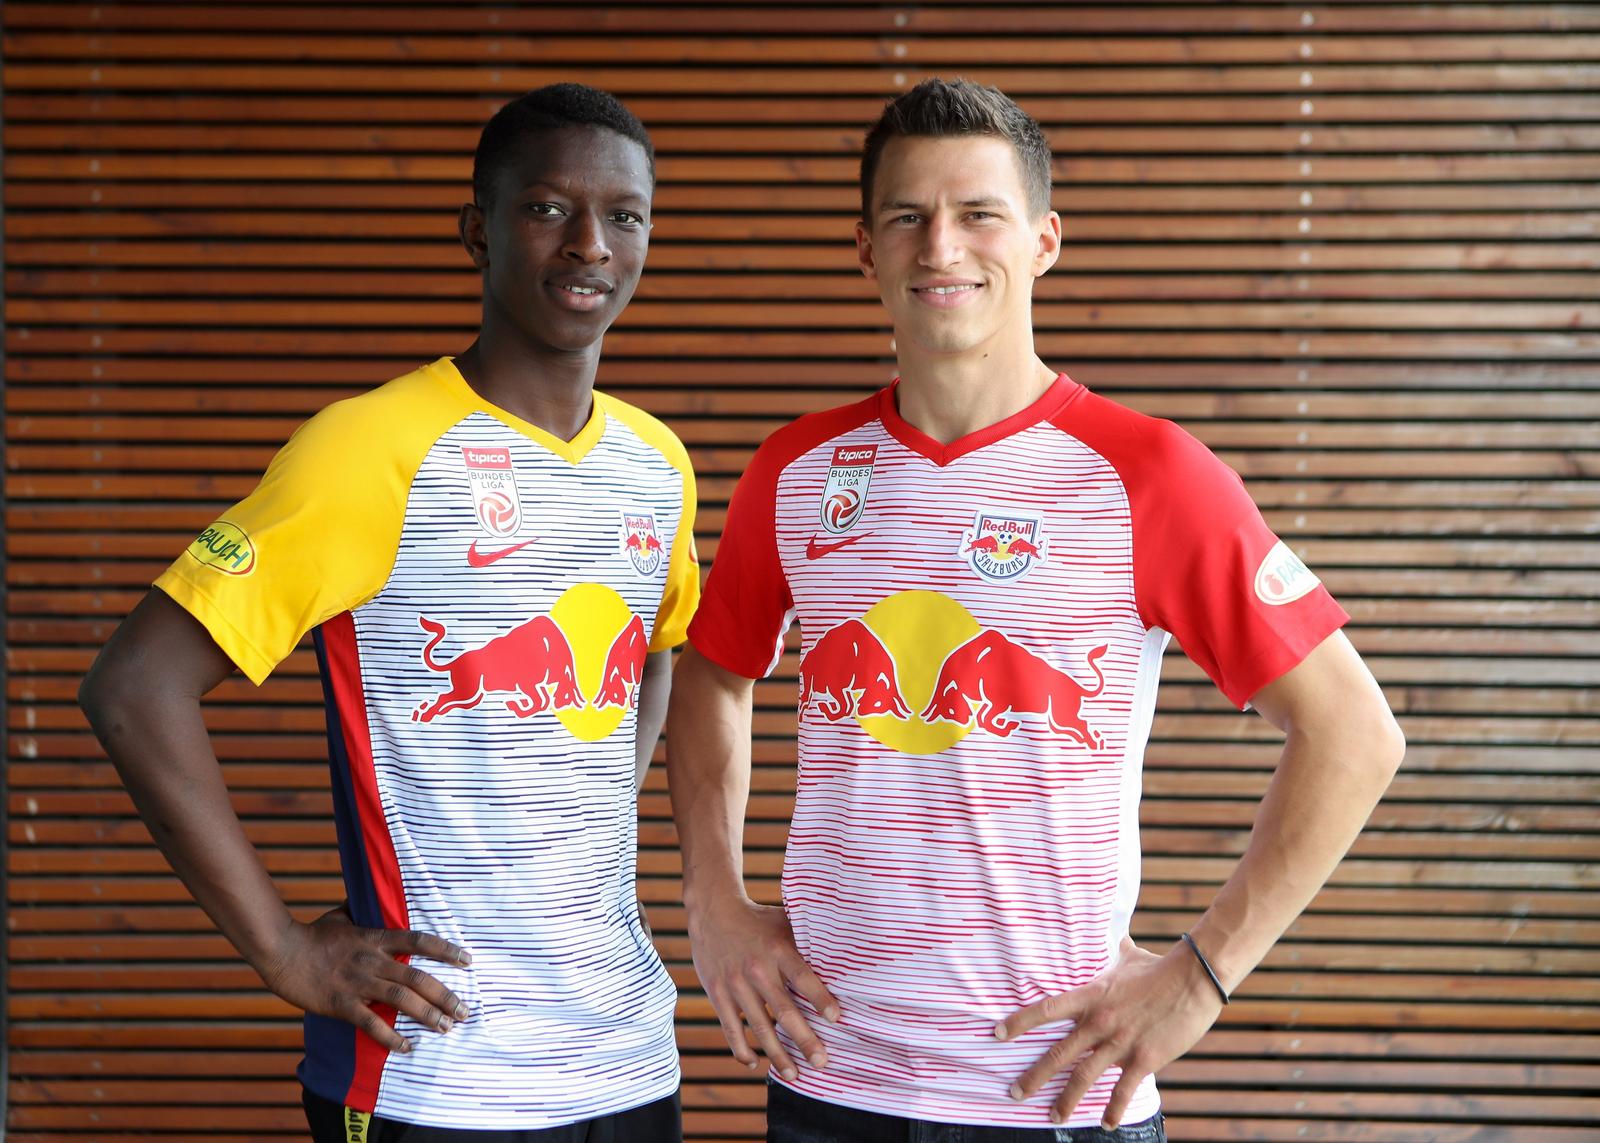 Garish Nike Red Bull Salzburg 18-19 Home & Away Kits Revealed - Footy